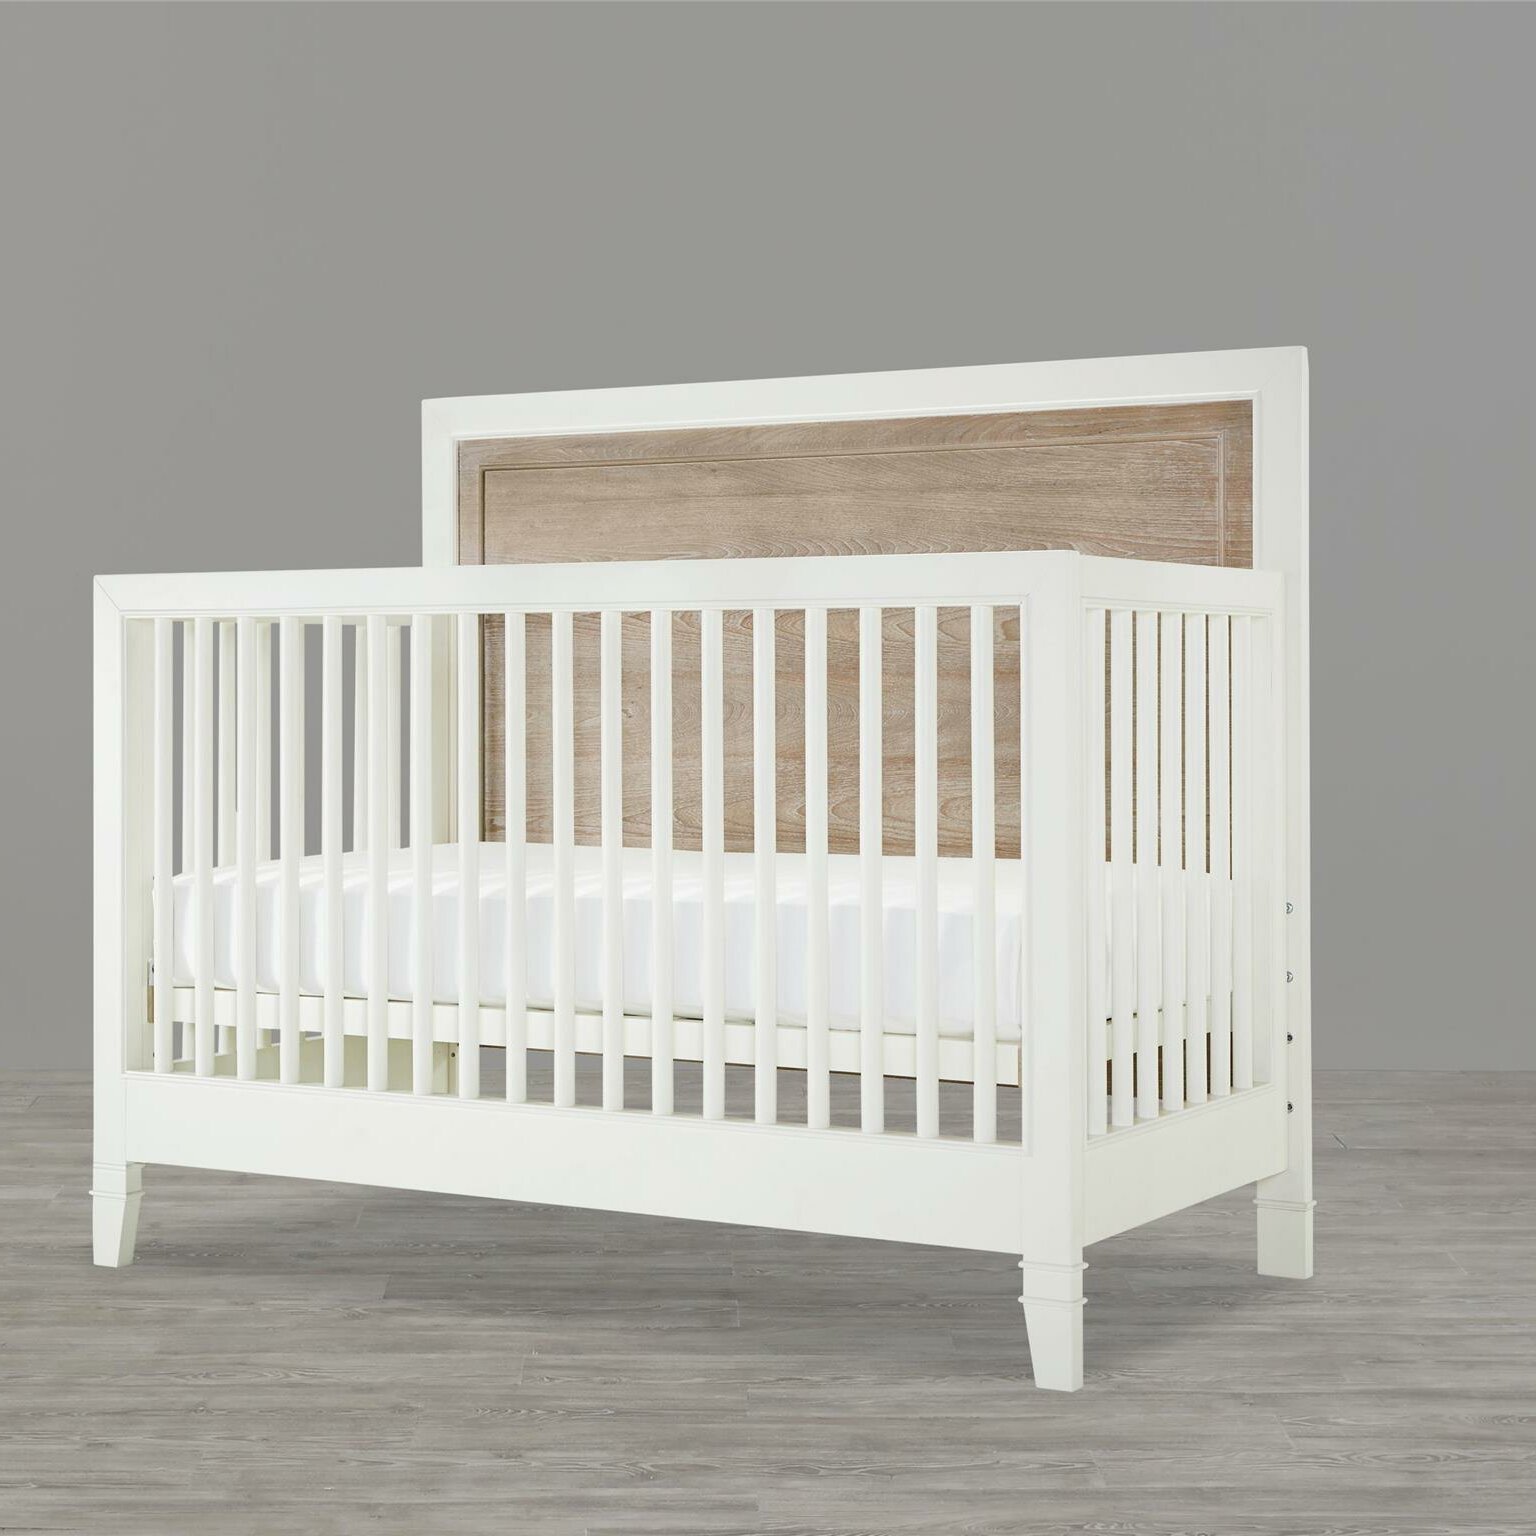 amart furniture baby cot